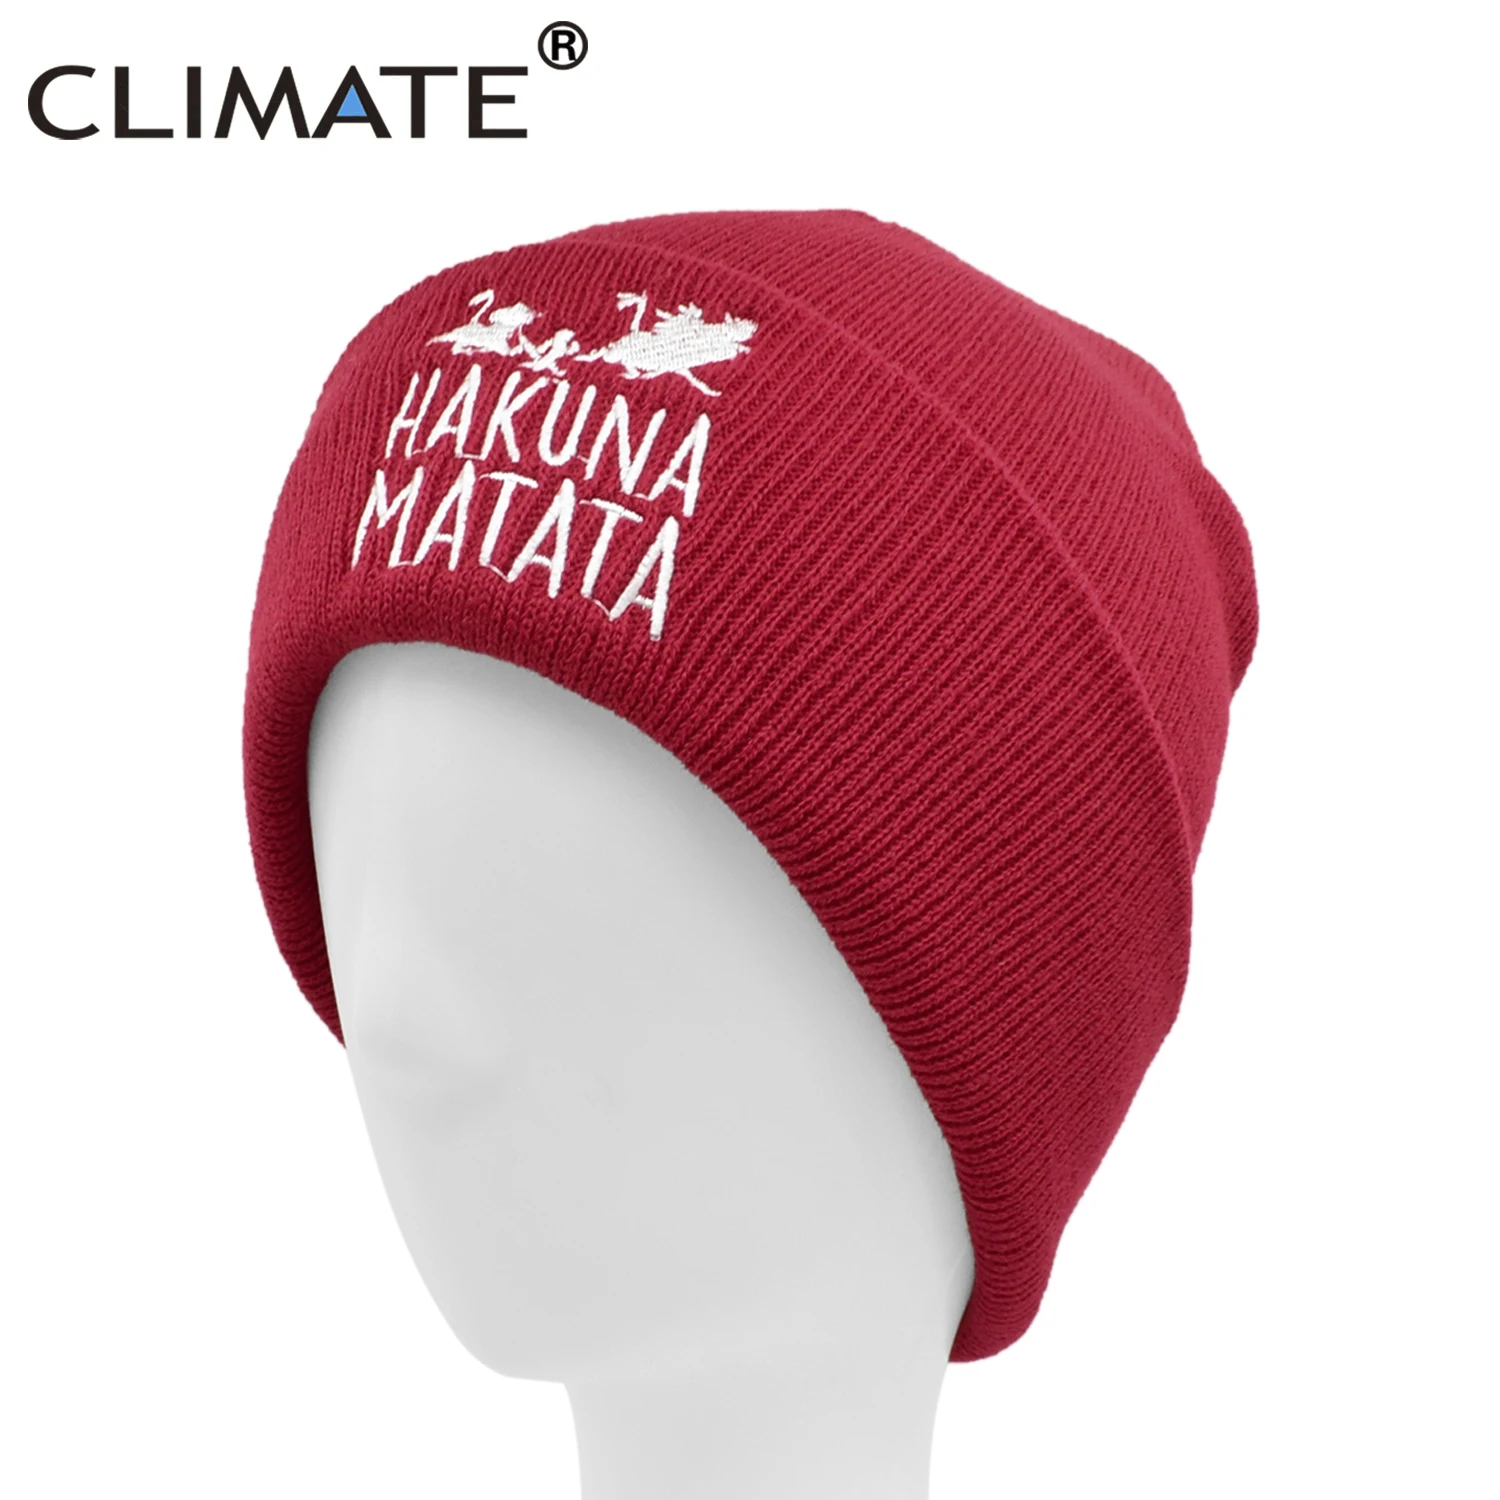 CLIMATE HAKUNA MATATA Beanie Lion King Pumba Winter Warm Knitted Hat Hakuna Matata Cool Black Knitted Winter Hat for Men Women 1